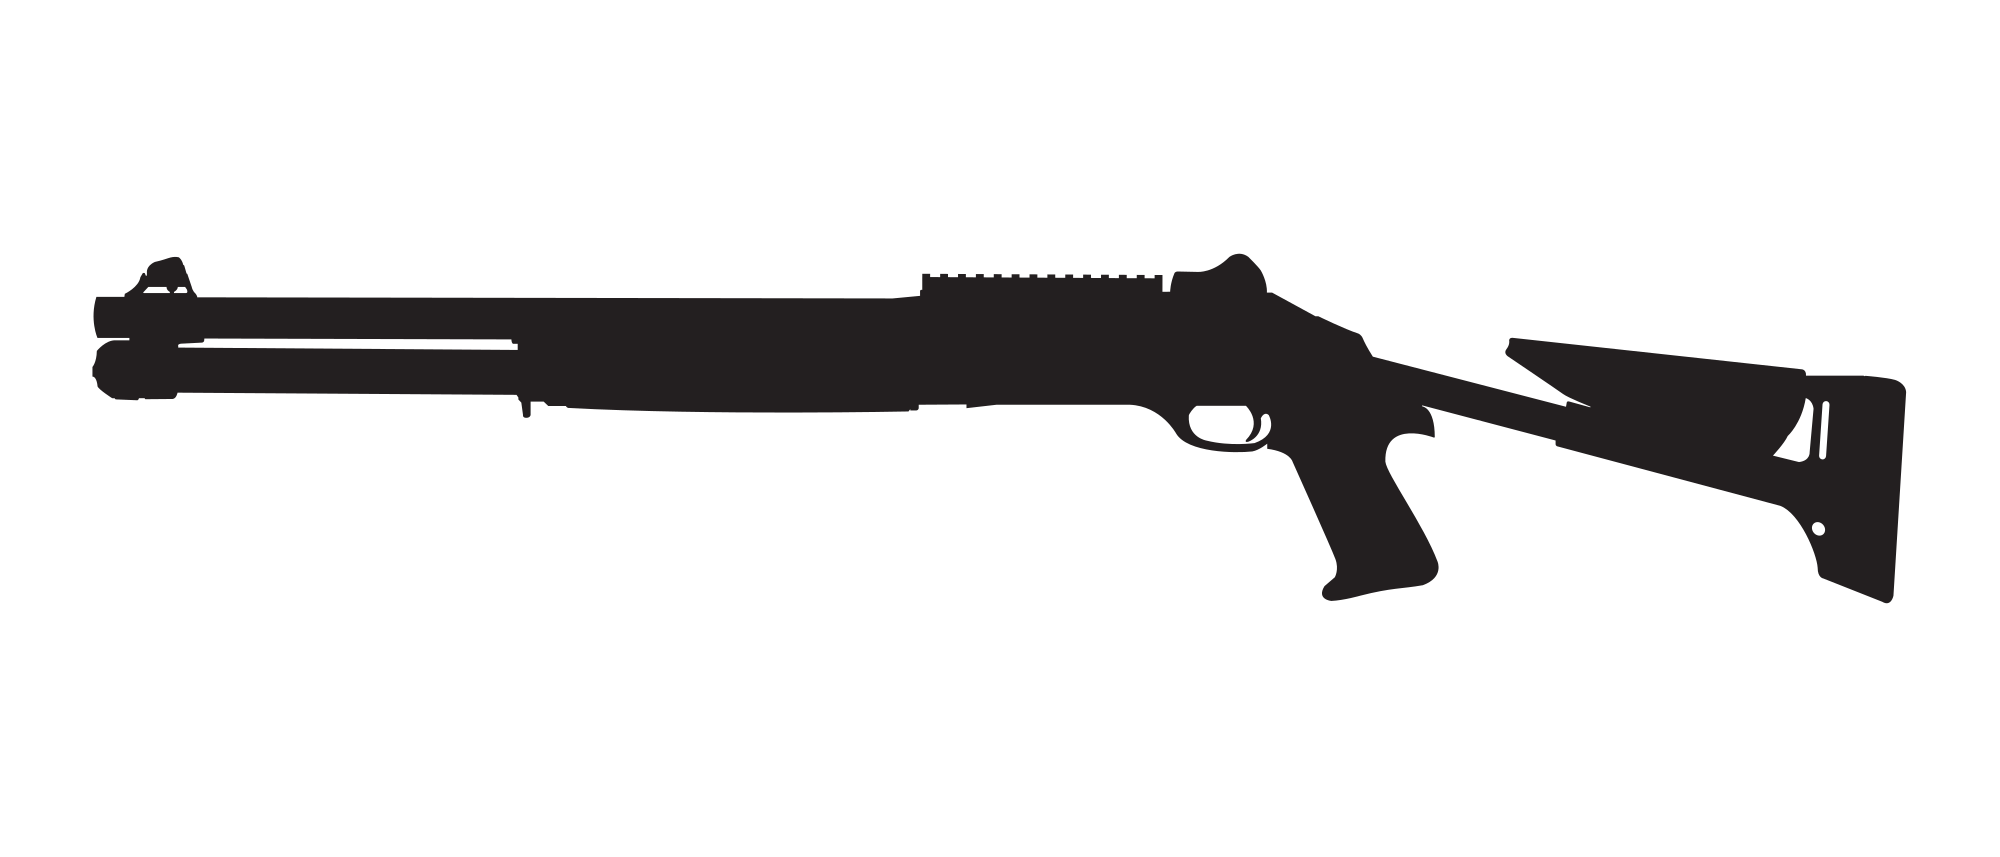 M4 Carbine Silhouette #1500498 (License: Personal Use) .